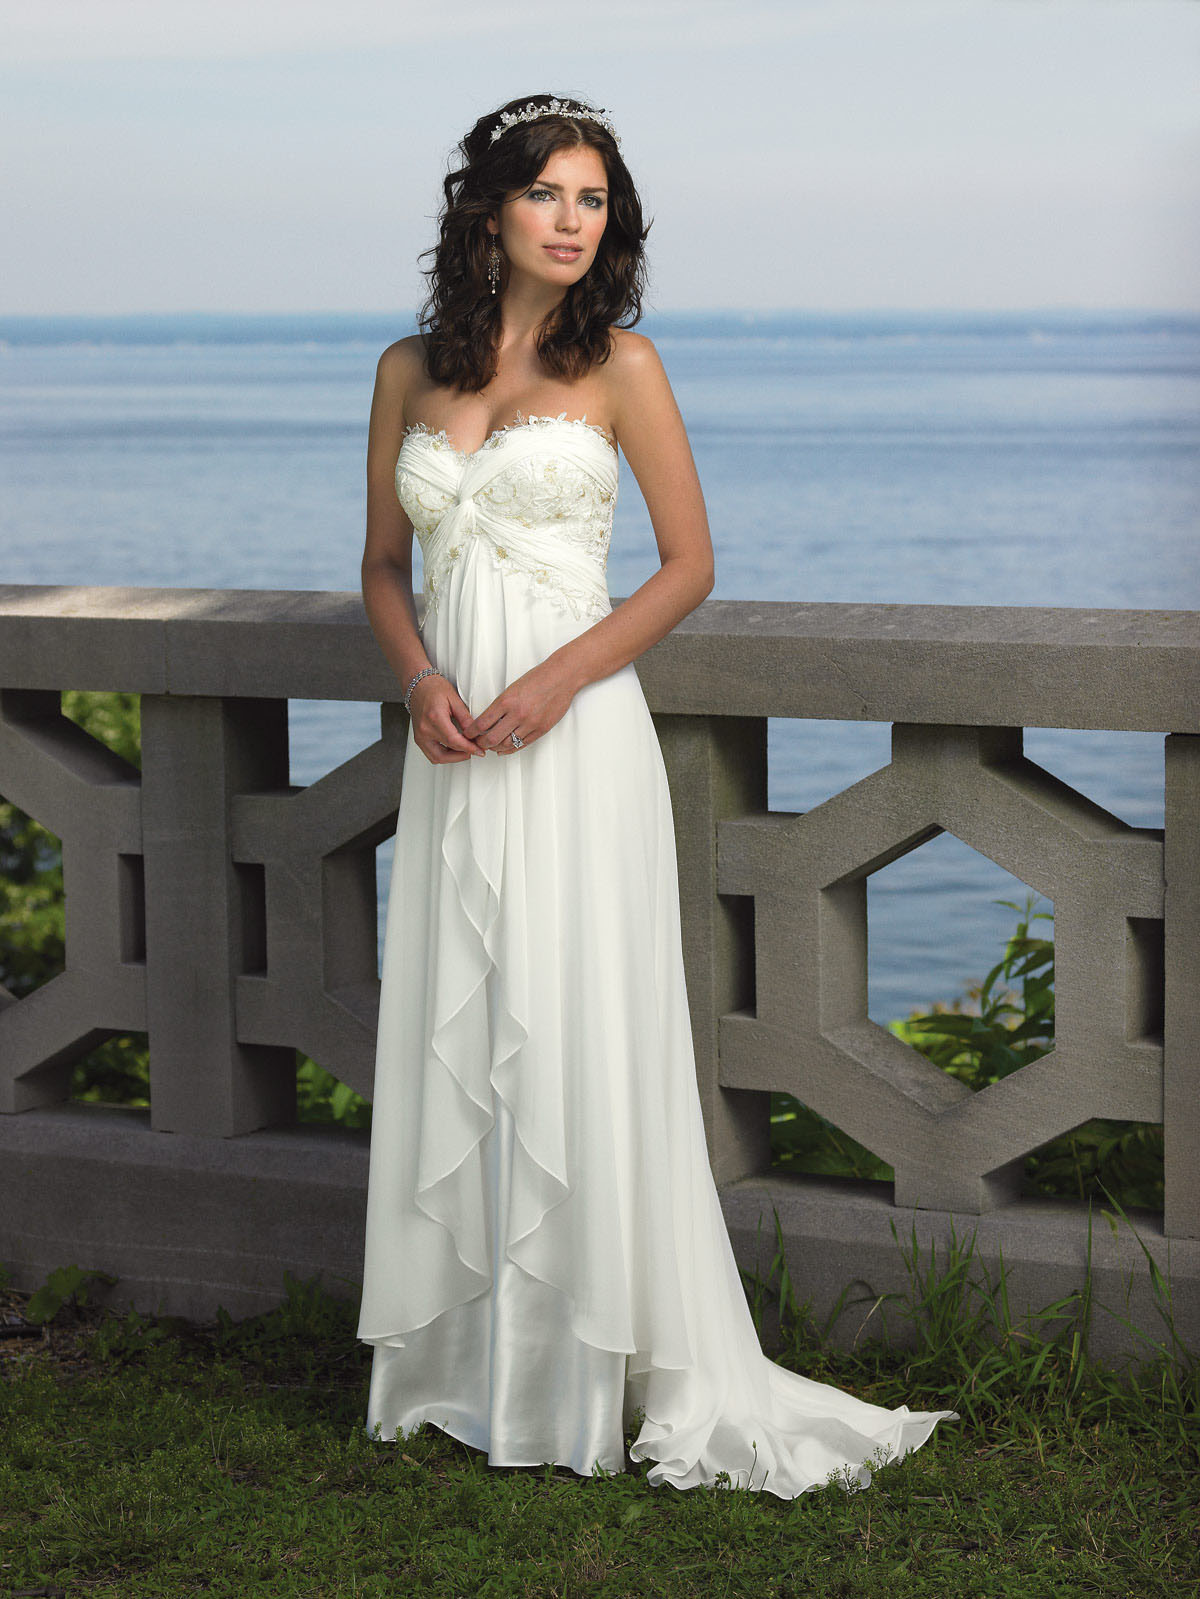 Beachy Wedding Dresses
 Top 10 perfect beach wedding dresses of 2014